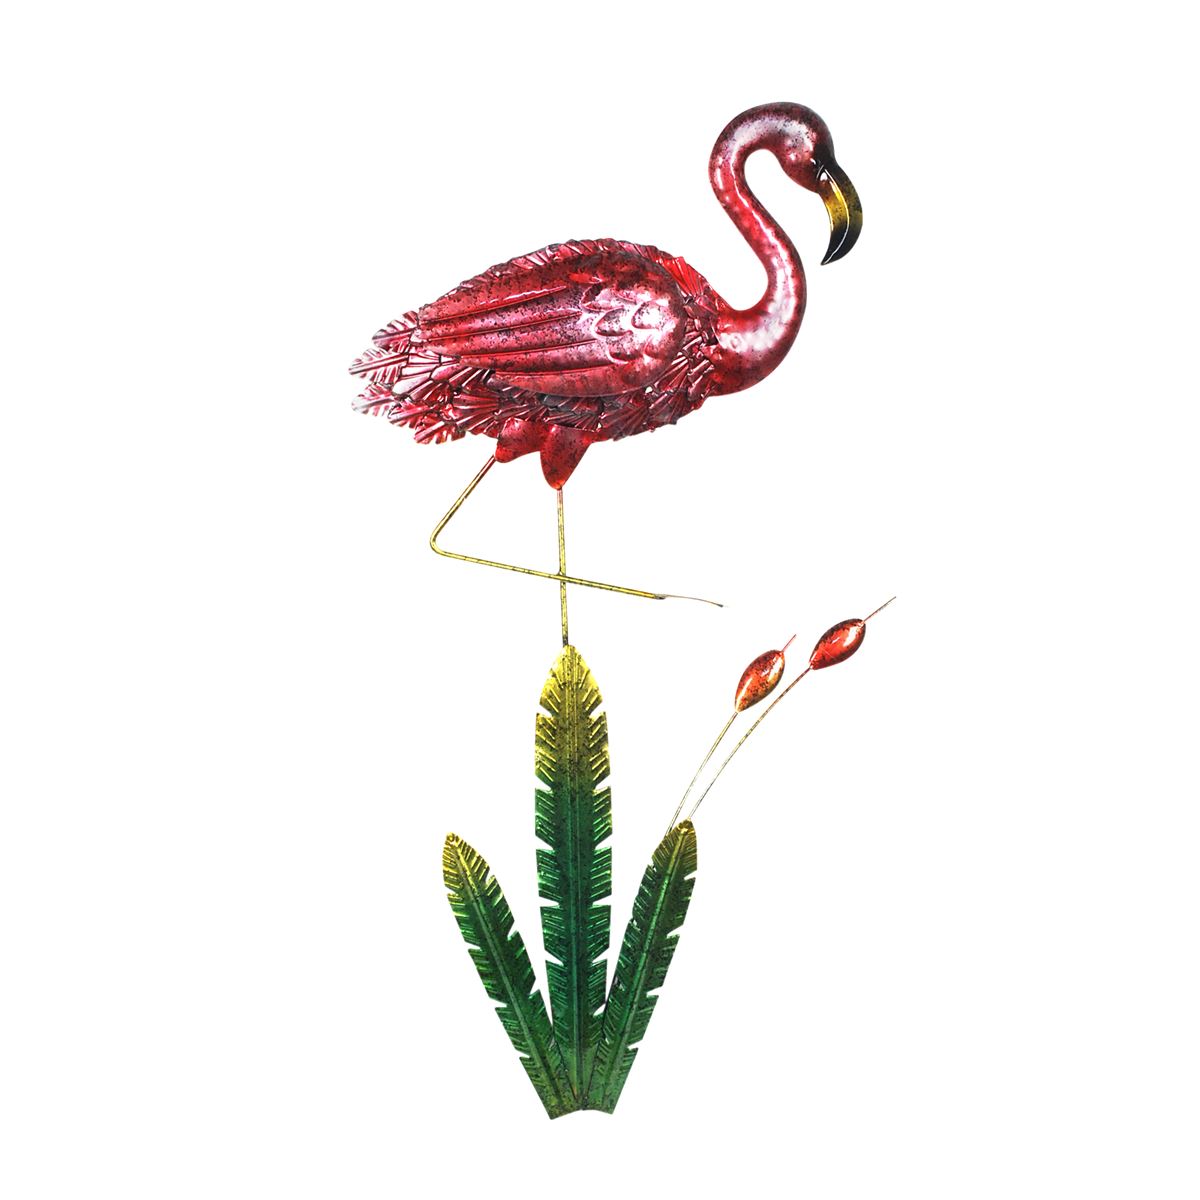 Flamingo metaal | XXL 59 28cm Onthewall